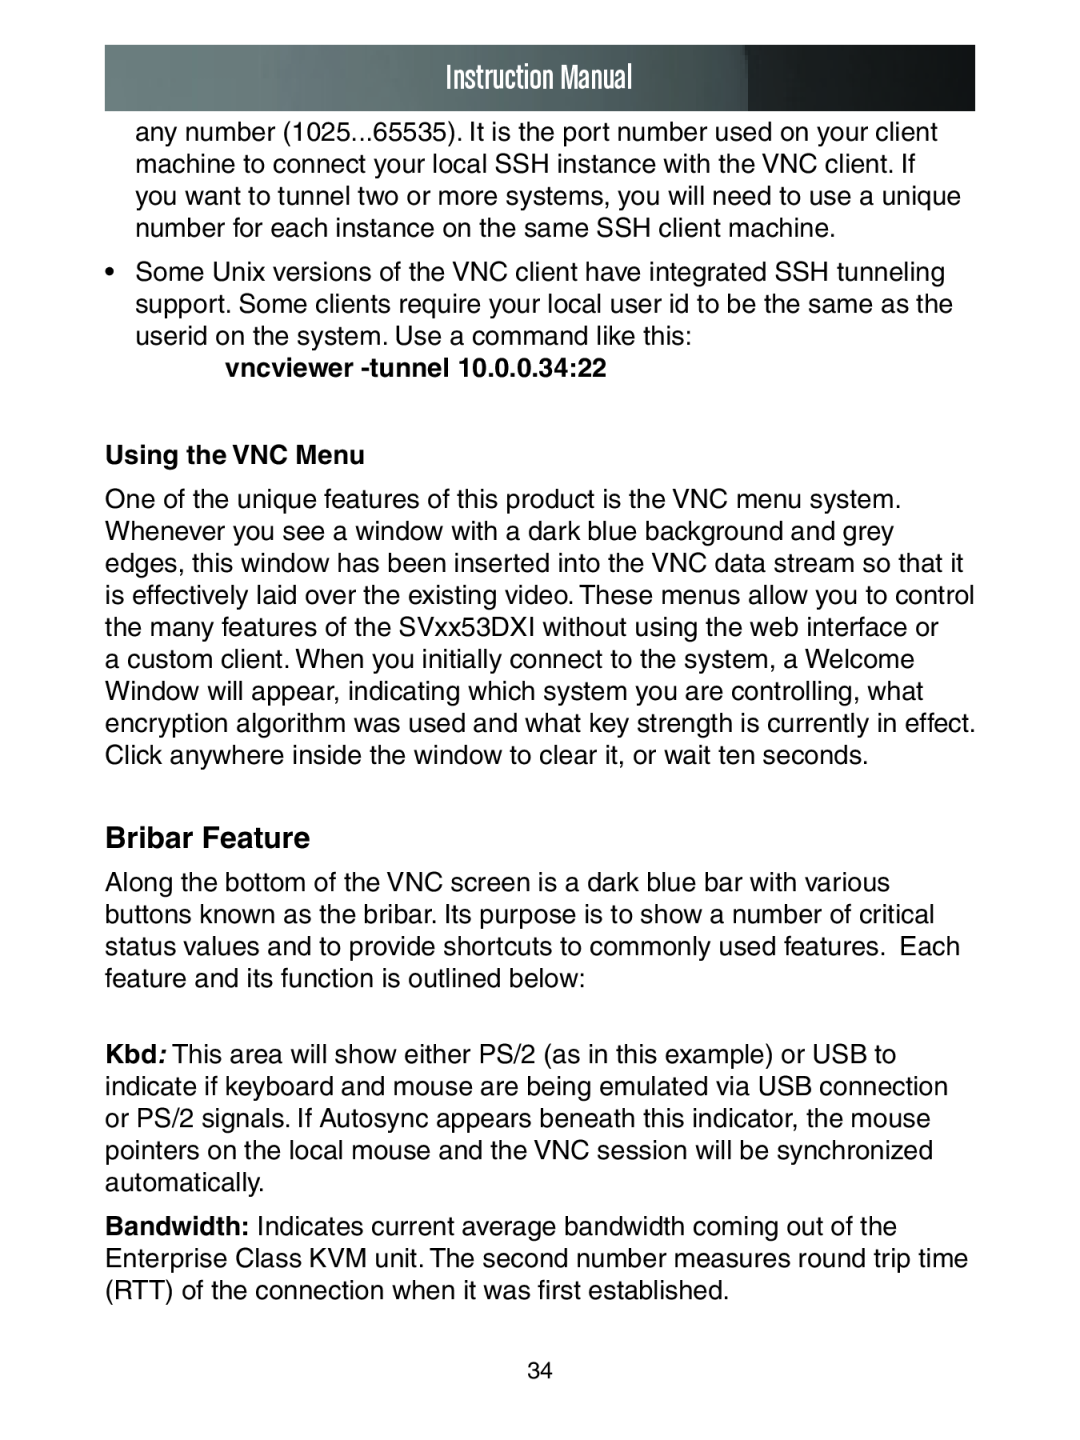 StarTech.com SV3253DXI, SV1653DXI manual Bribar Feature, vncviewer -tunnel Using the VNC Menu, Instruction Manual 